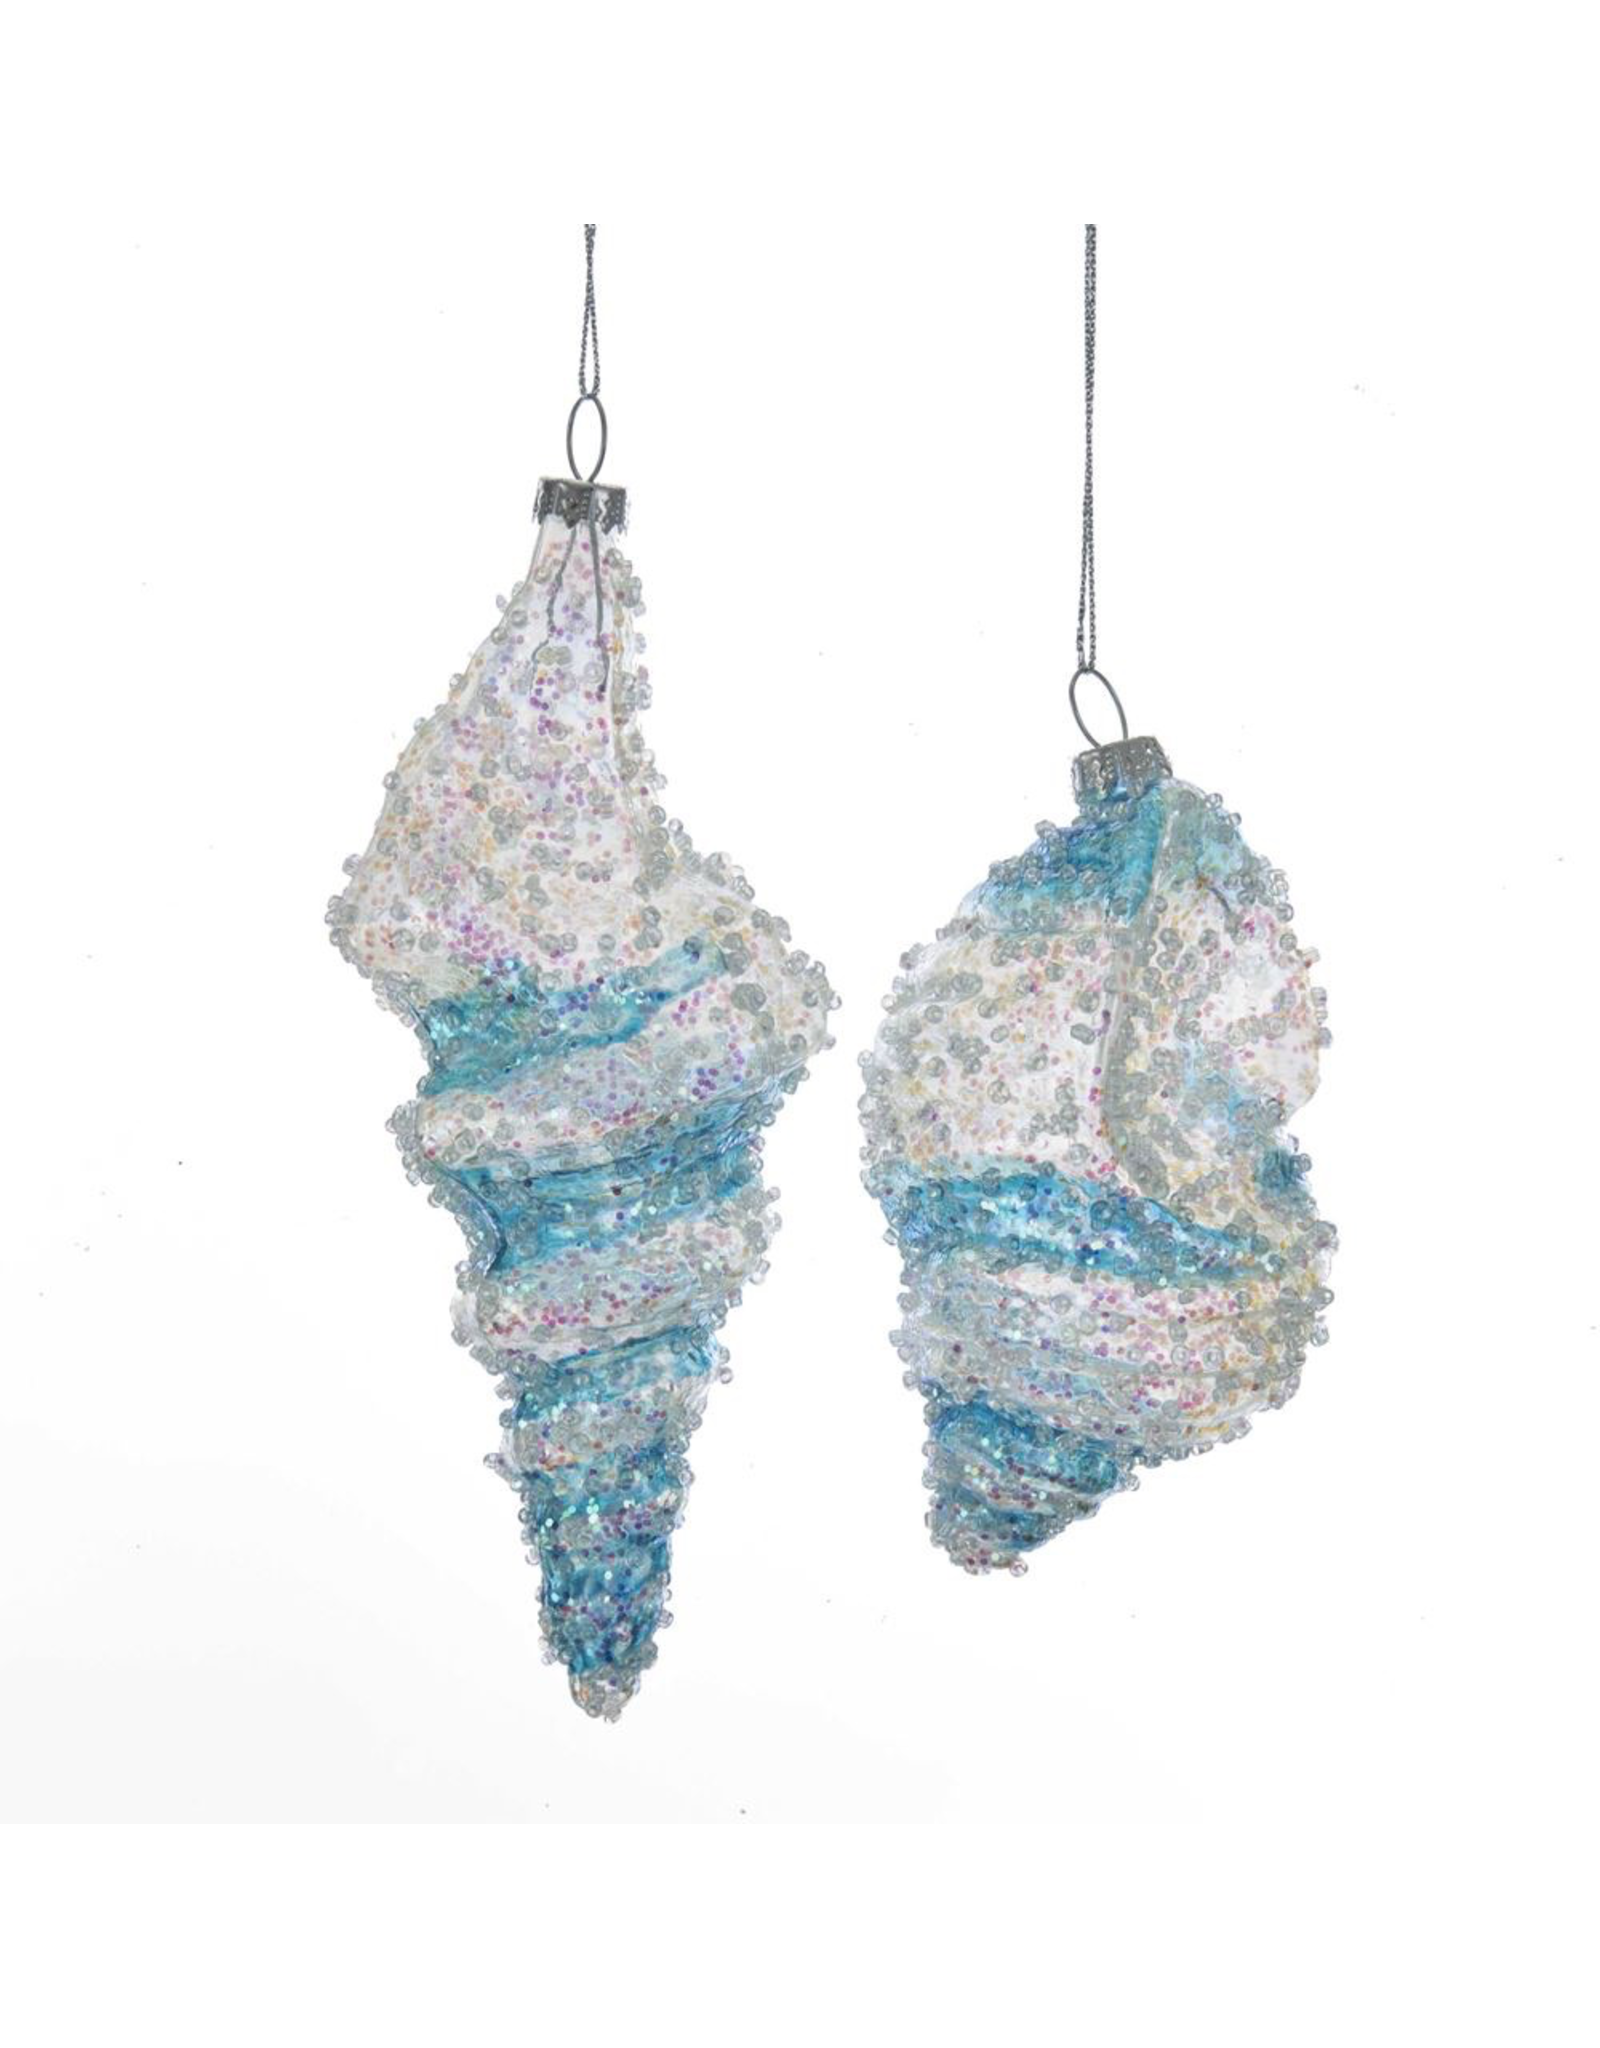 Kurt Adler Beaded Iridescent Glass Shell Ornament w Blue Clear Stripes Set of 2